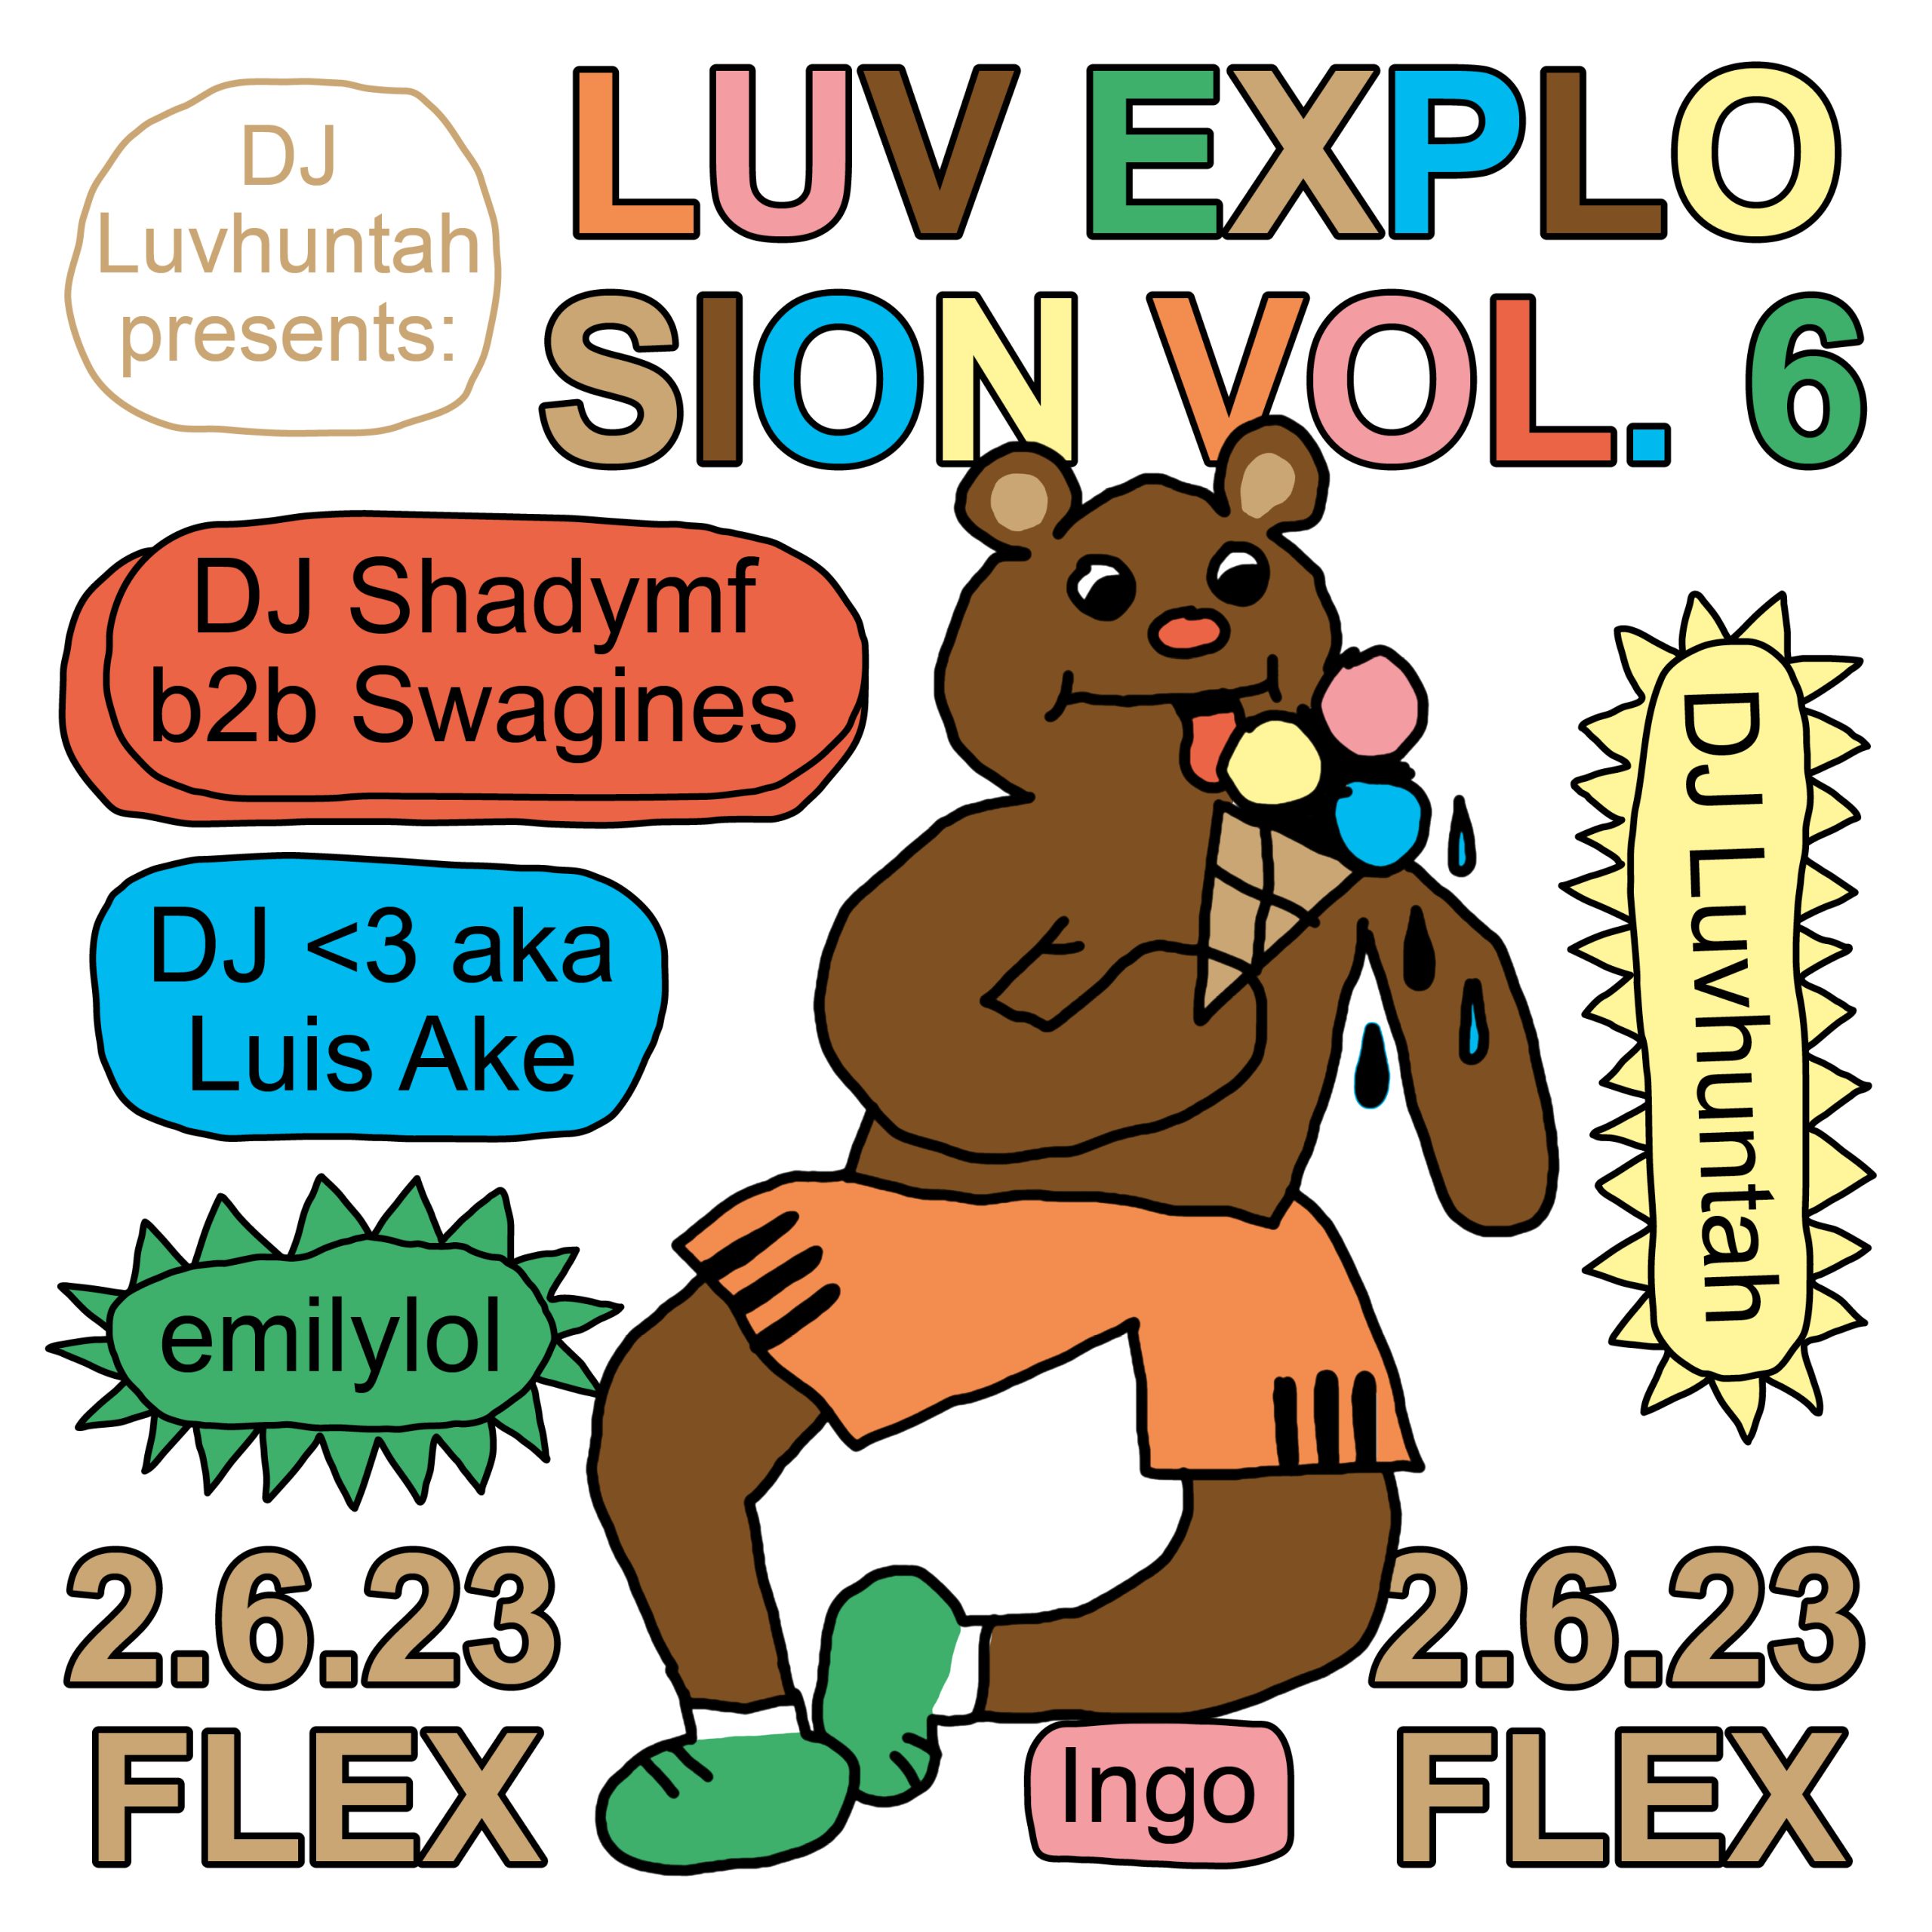 Luv Explosion Vol. 06 am 2. June 2023 @ Flex.